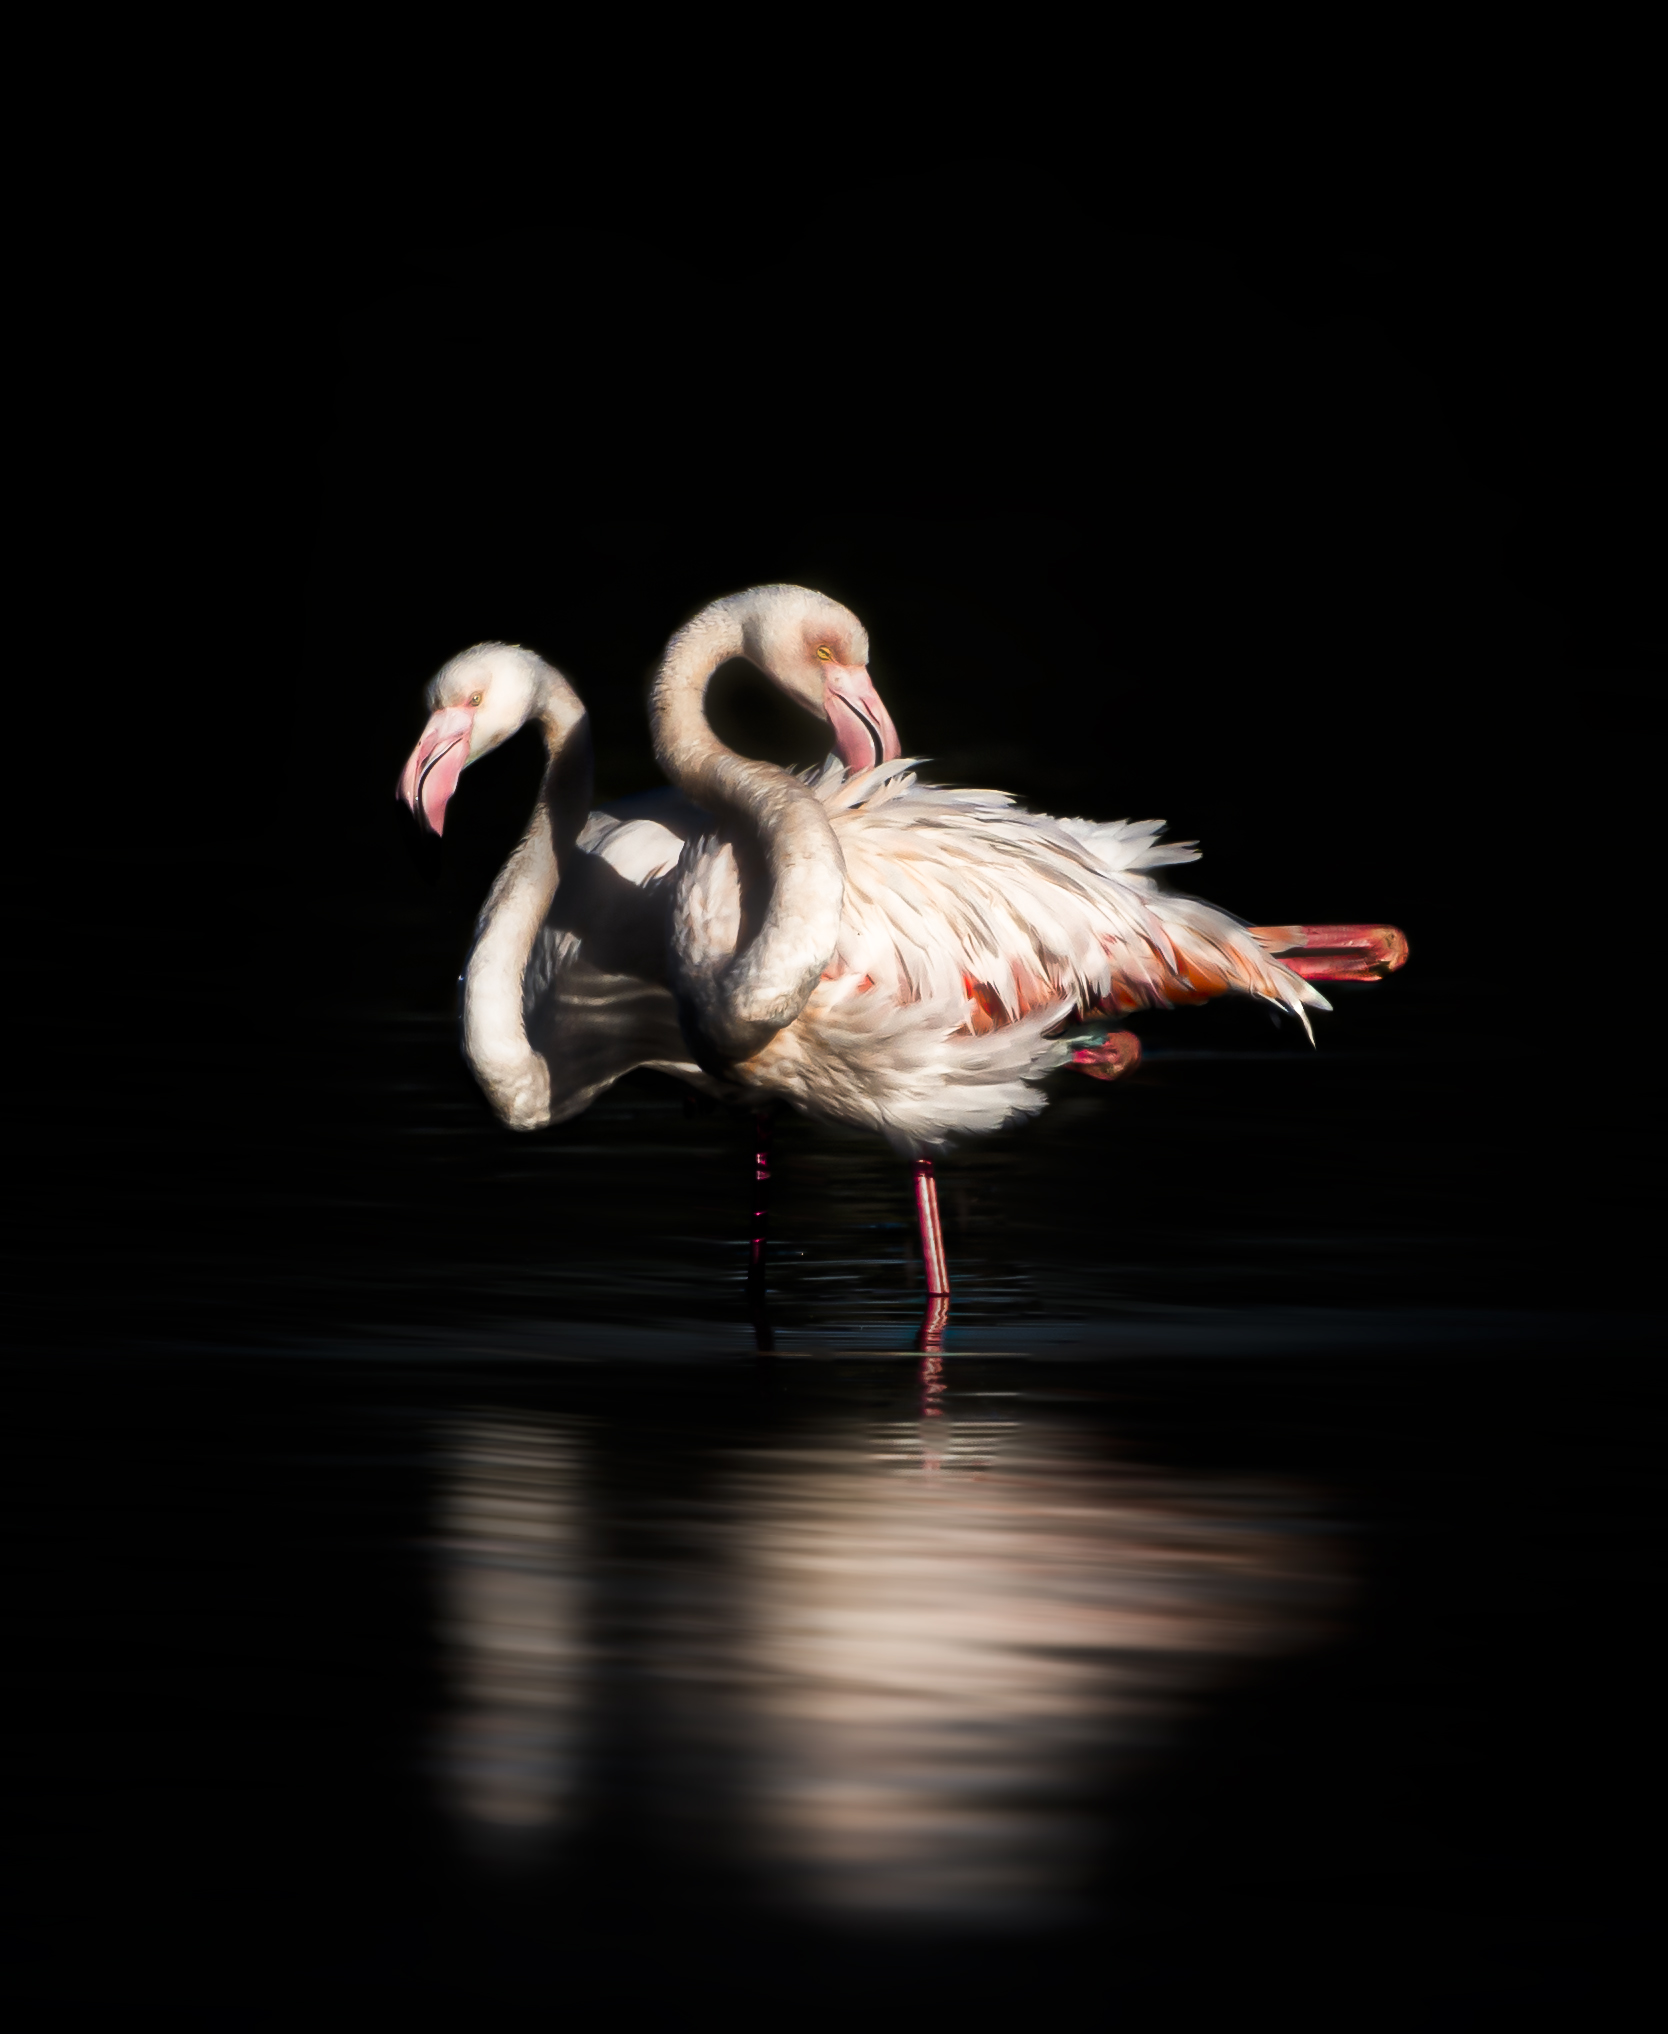 Flamingoes ...